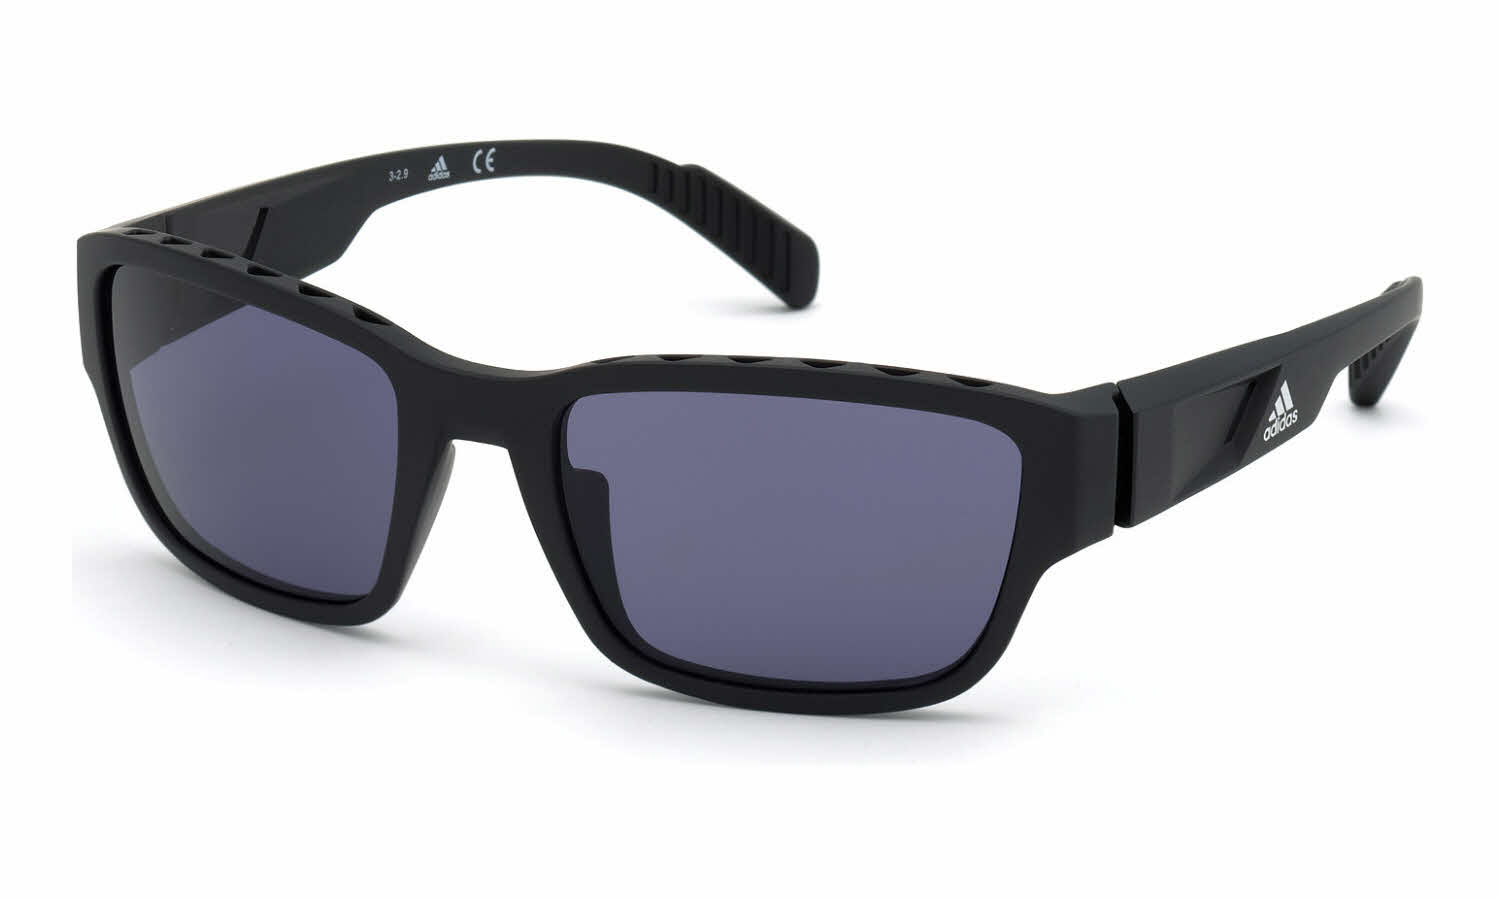 Adidas SP0007 Sunglasses